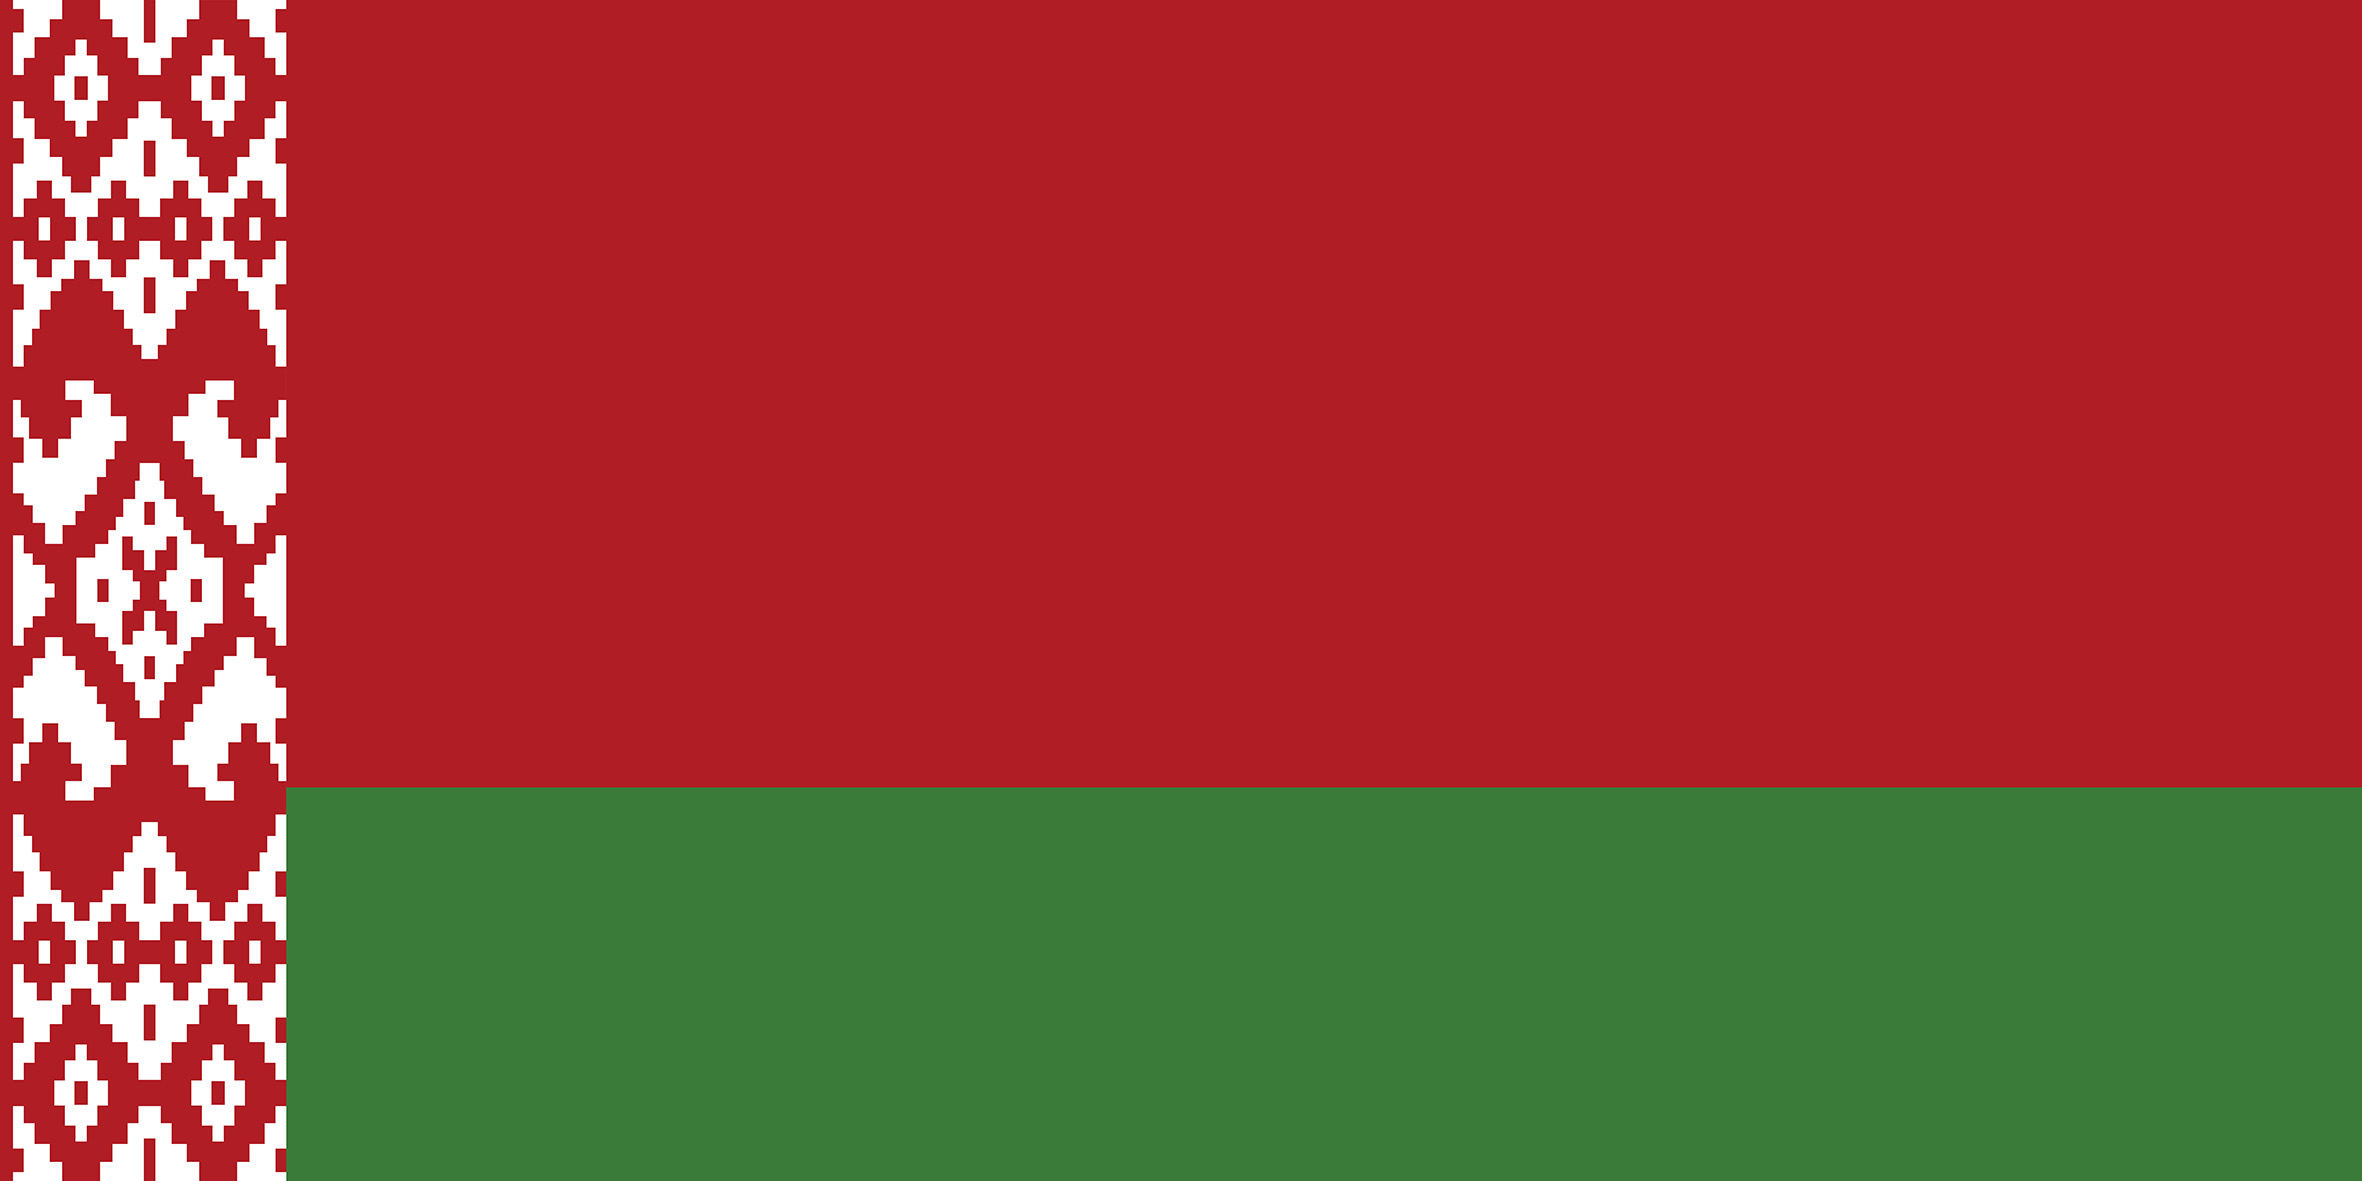 flag_Belarus_2.jpg (2362×1181)